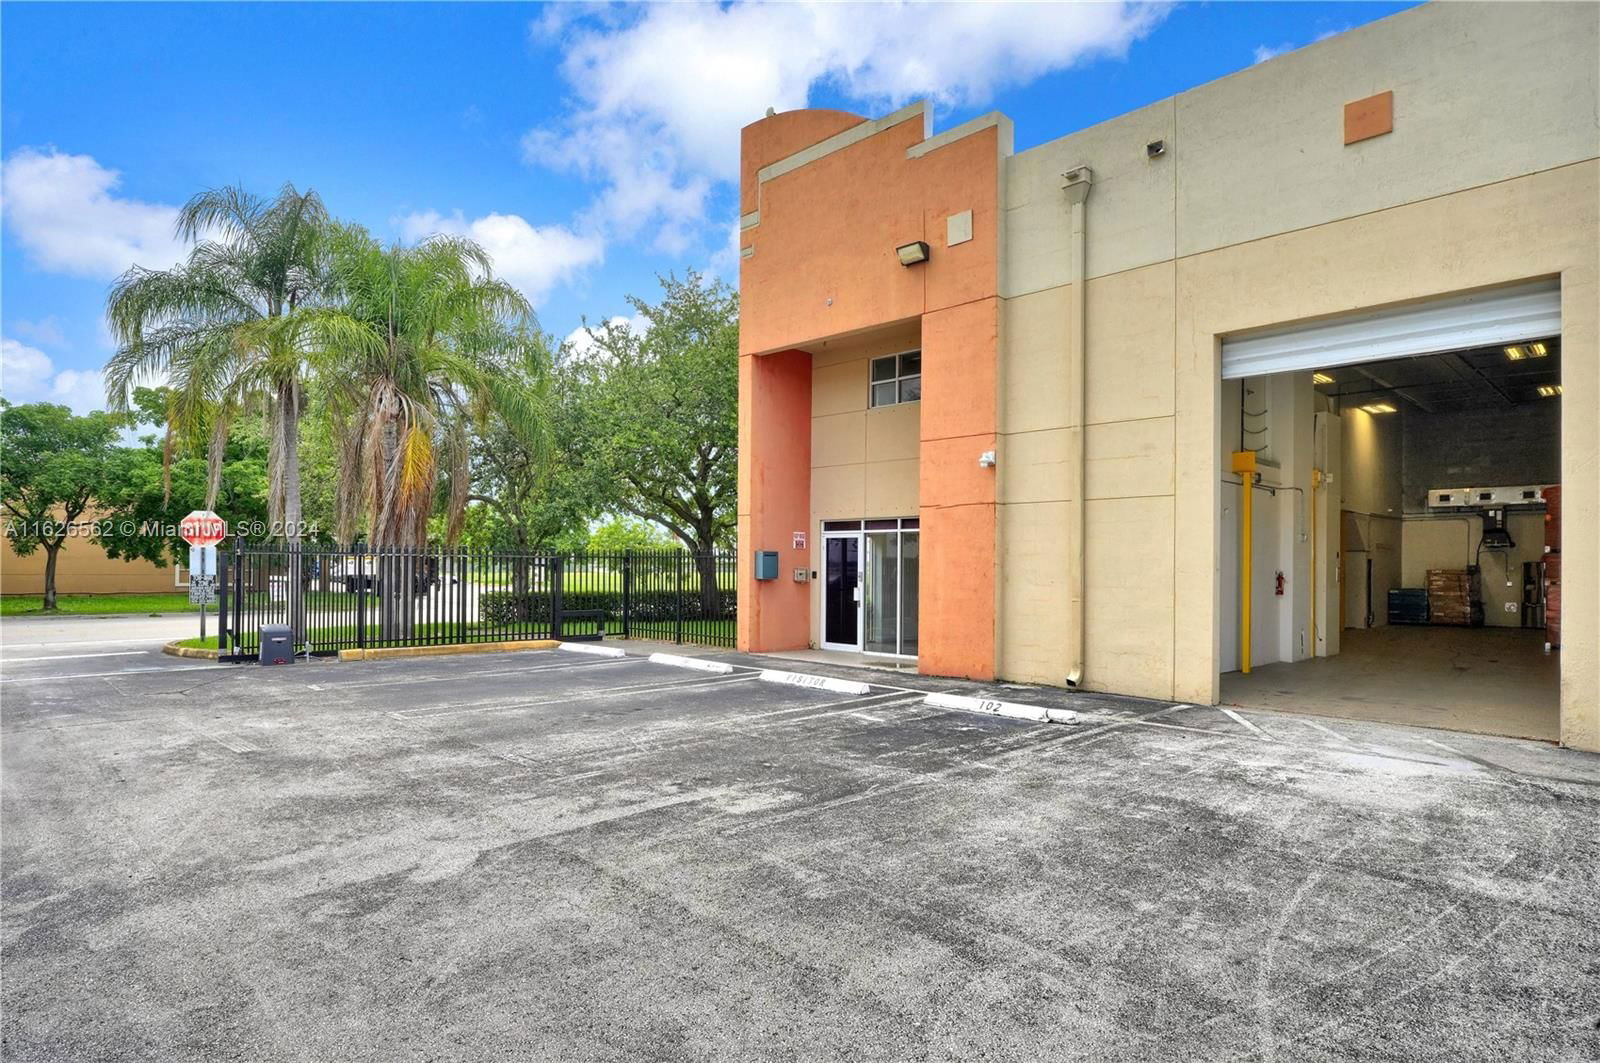 Real estate property located at 13701 143rd Ct, Miami-Dade County, Miami, FL